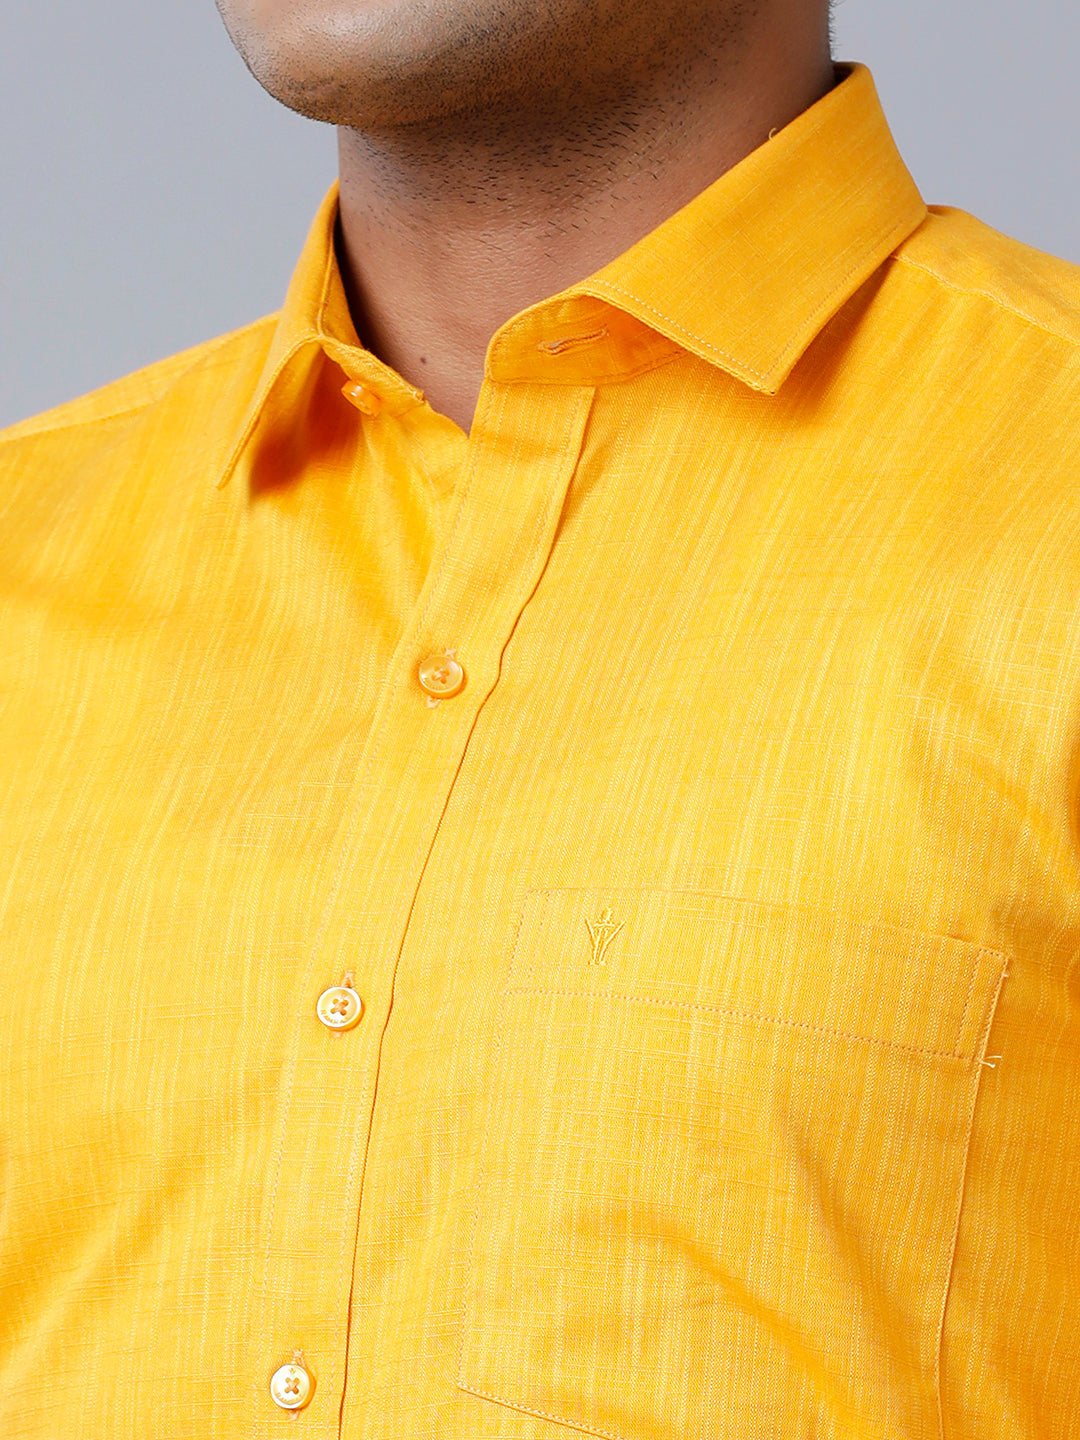 Mens Formal Shirt Full Sleeves Orange CL2 GT34-Zoom view